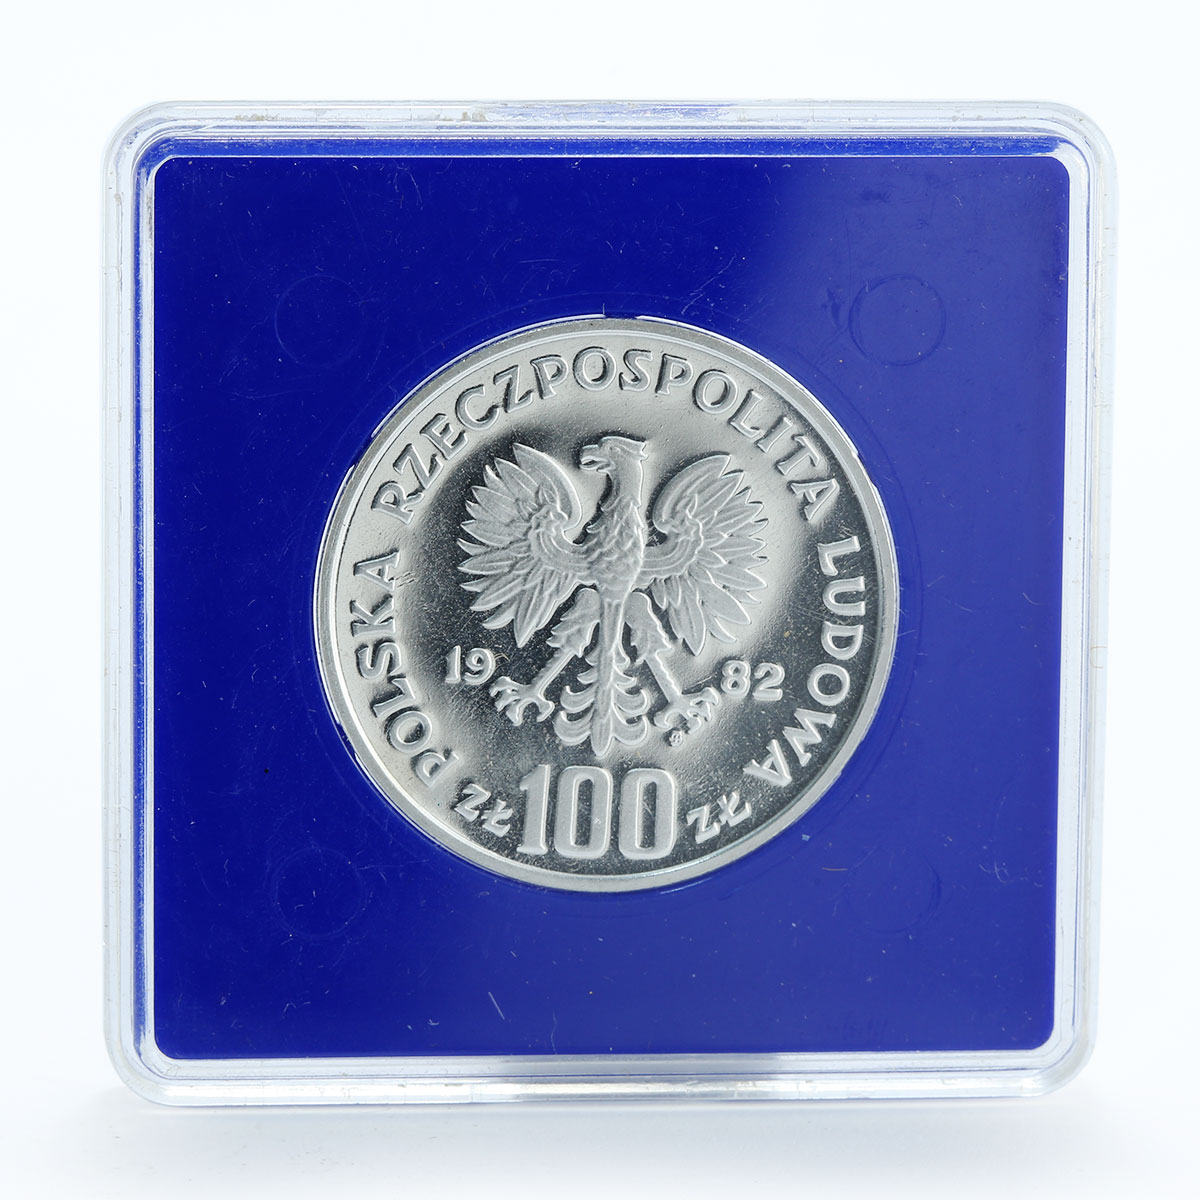 Poland 100 PLN Protection of environment White stork silver coin 1982